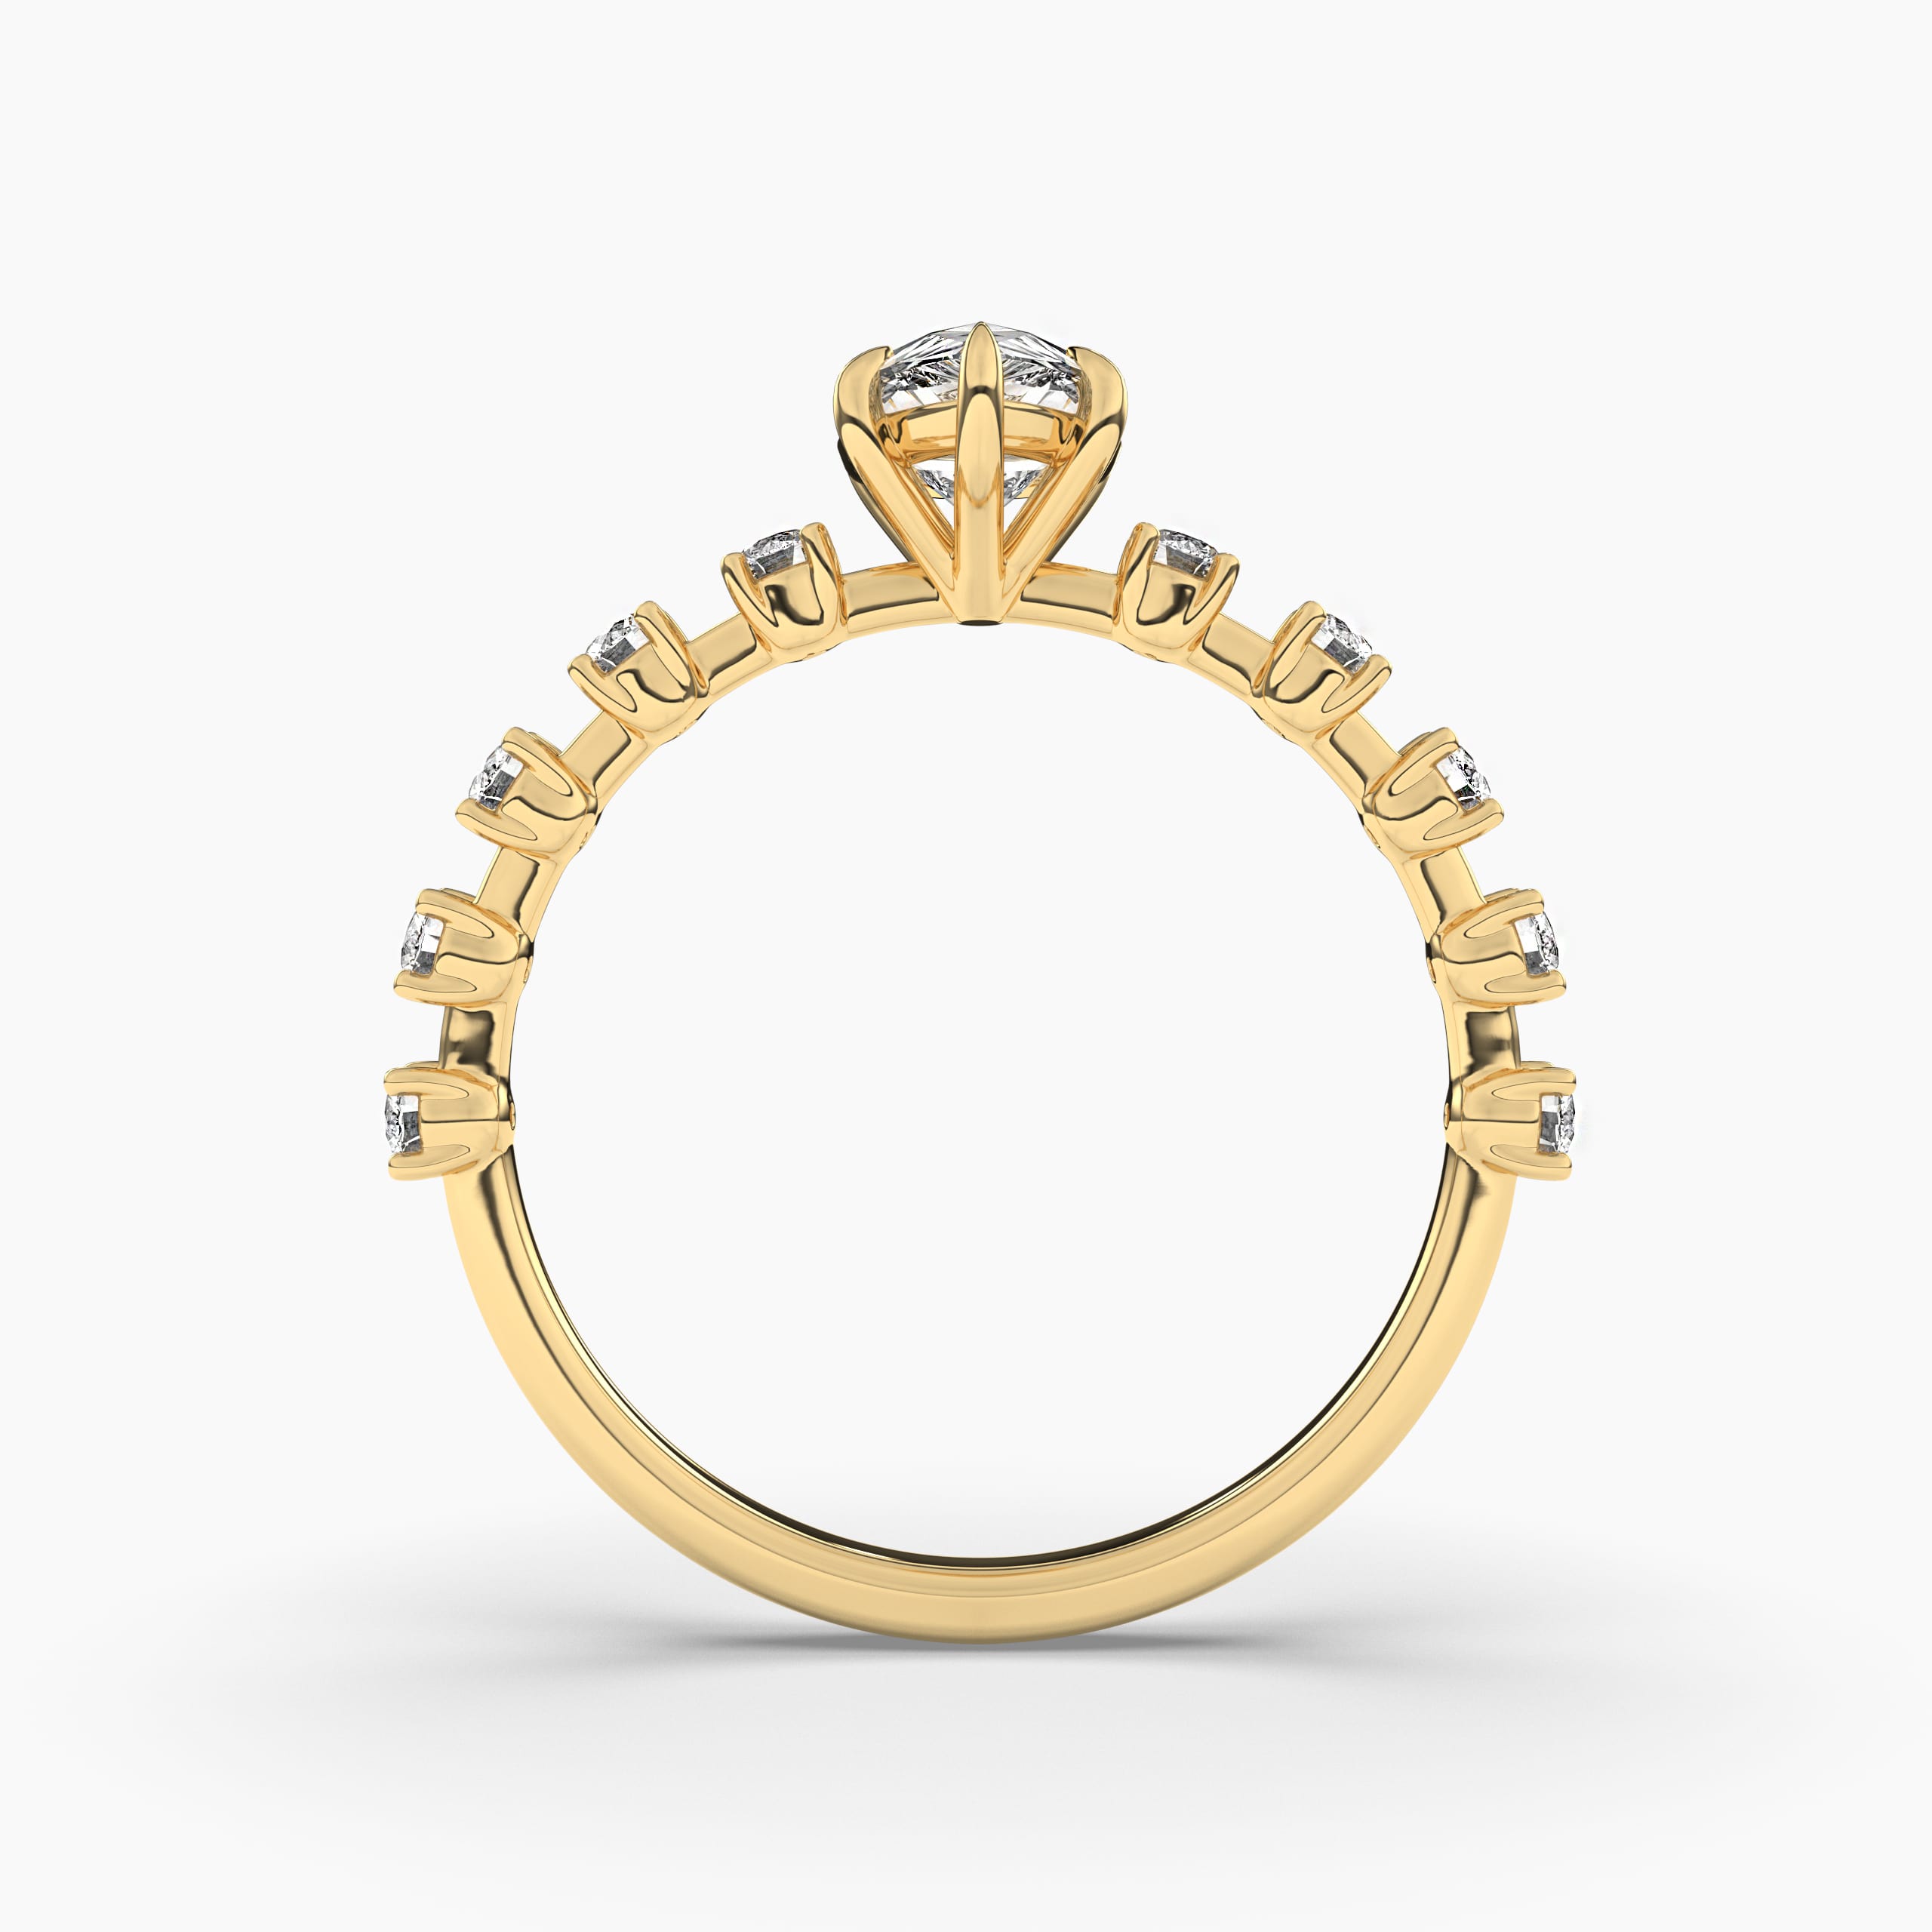  RUBY PEAR SHAPE DIAMOND DESIGN RING